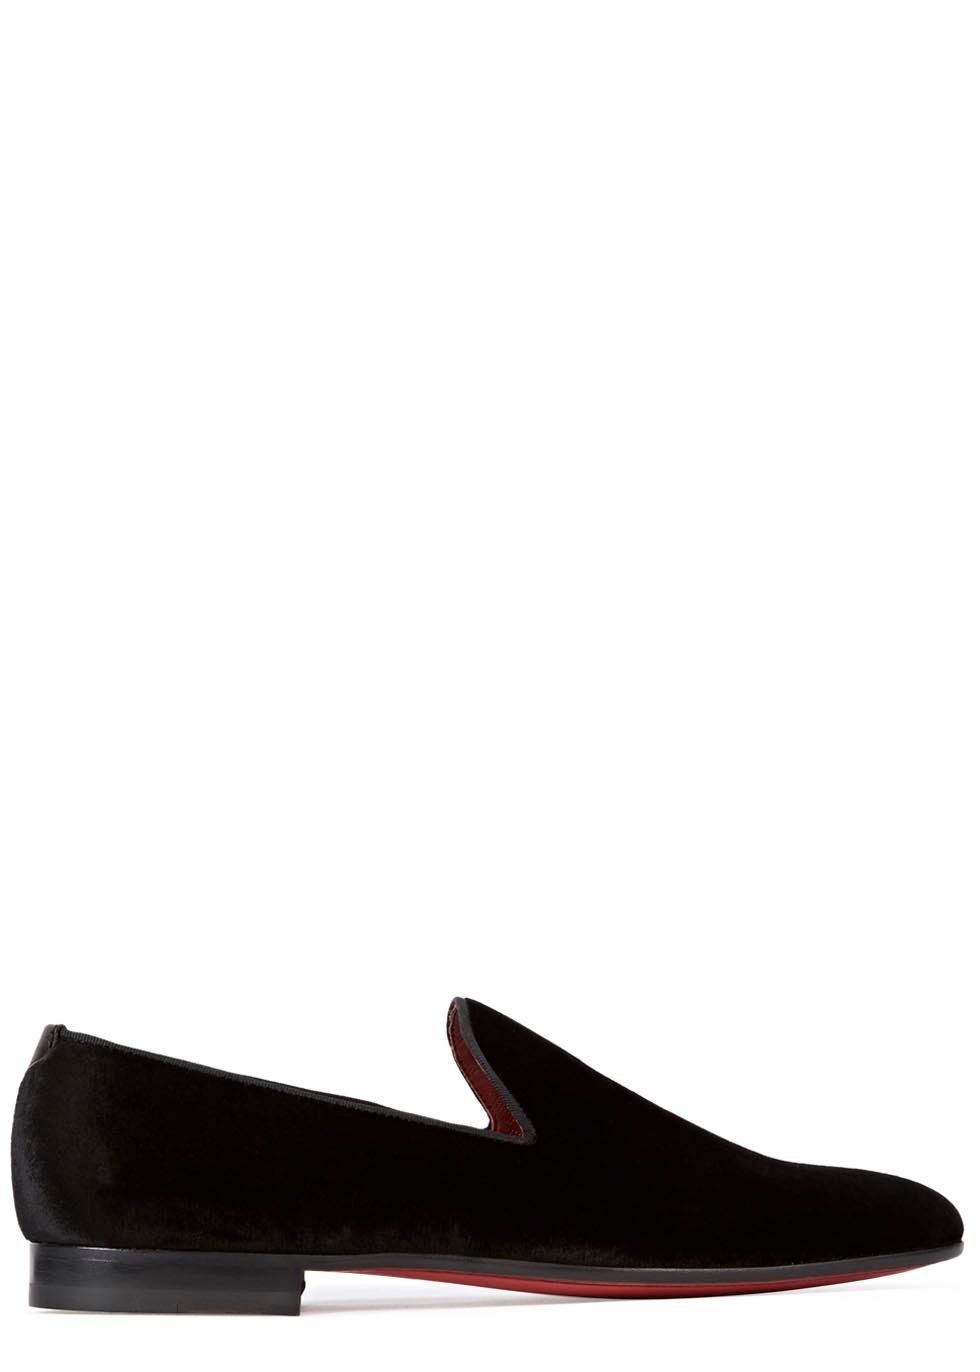 MAGNANNI Dorio black velvet loafers - Harvey Nichols